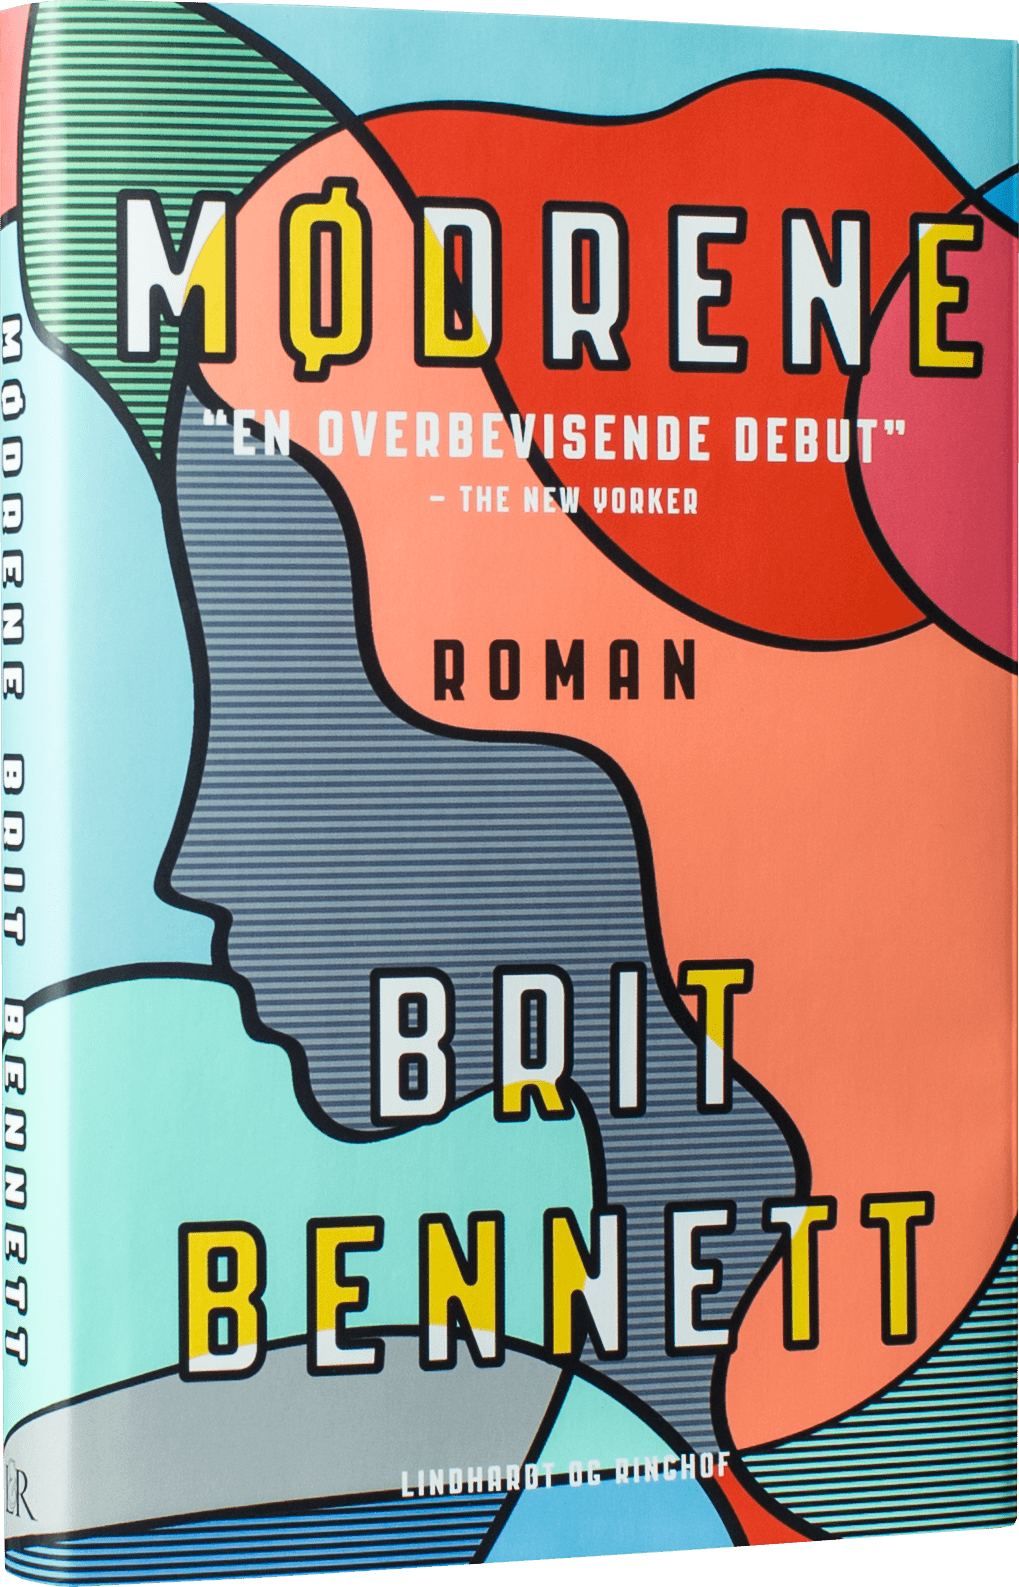 Mødrene, Brit Bennett, amerikansk roman, kærlighedsroman, ungdom, venskab